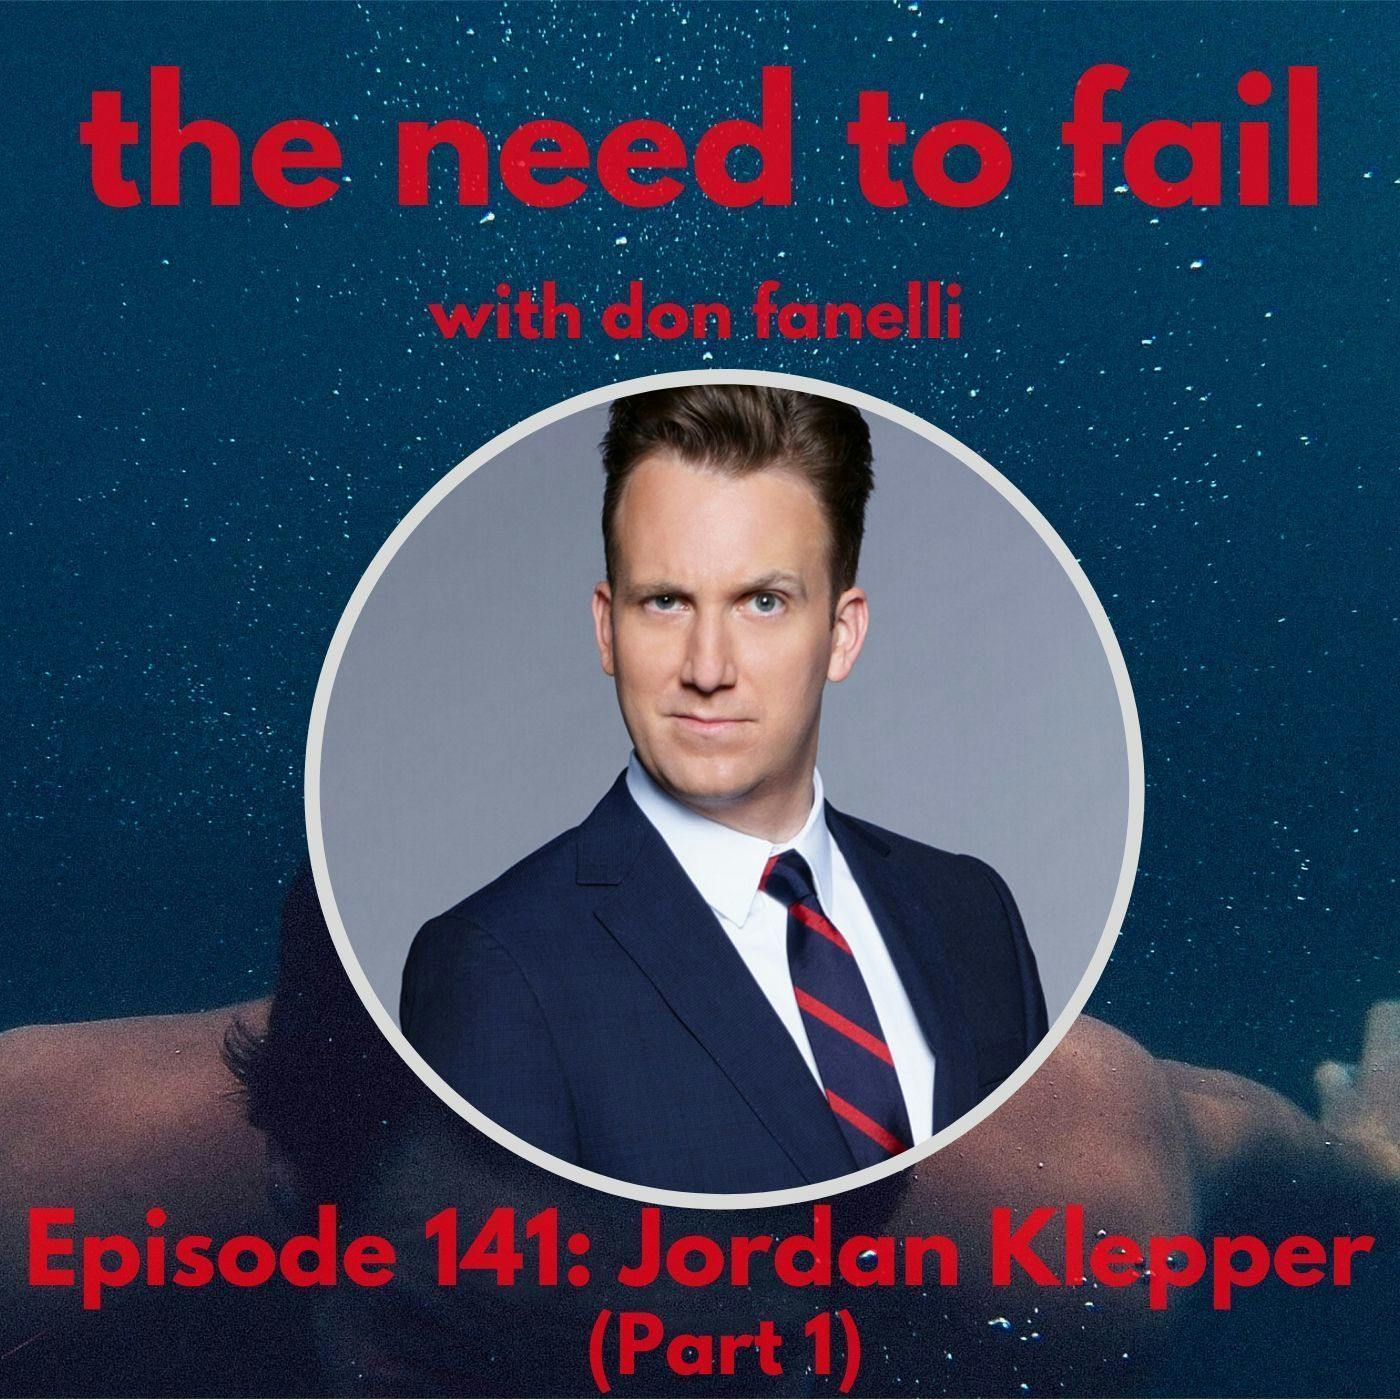 Episode 141: Jordan Klepper (Part 1)